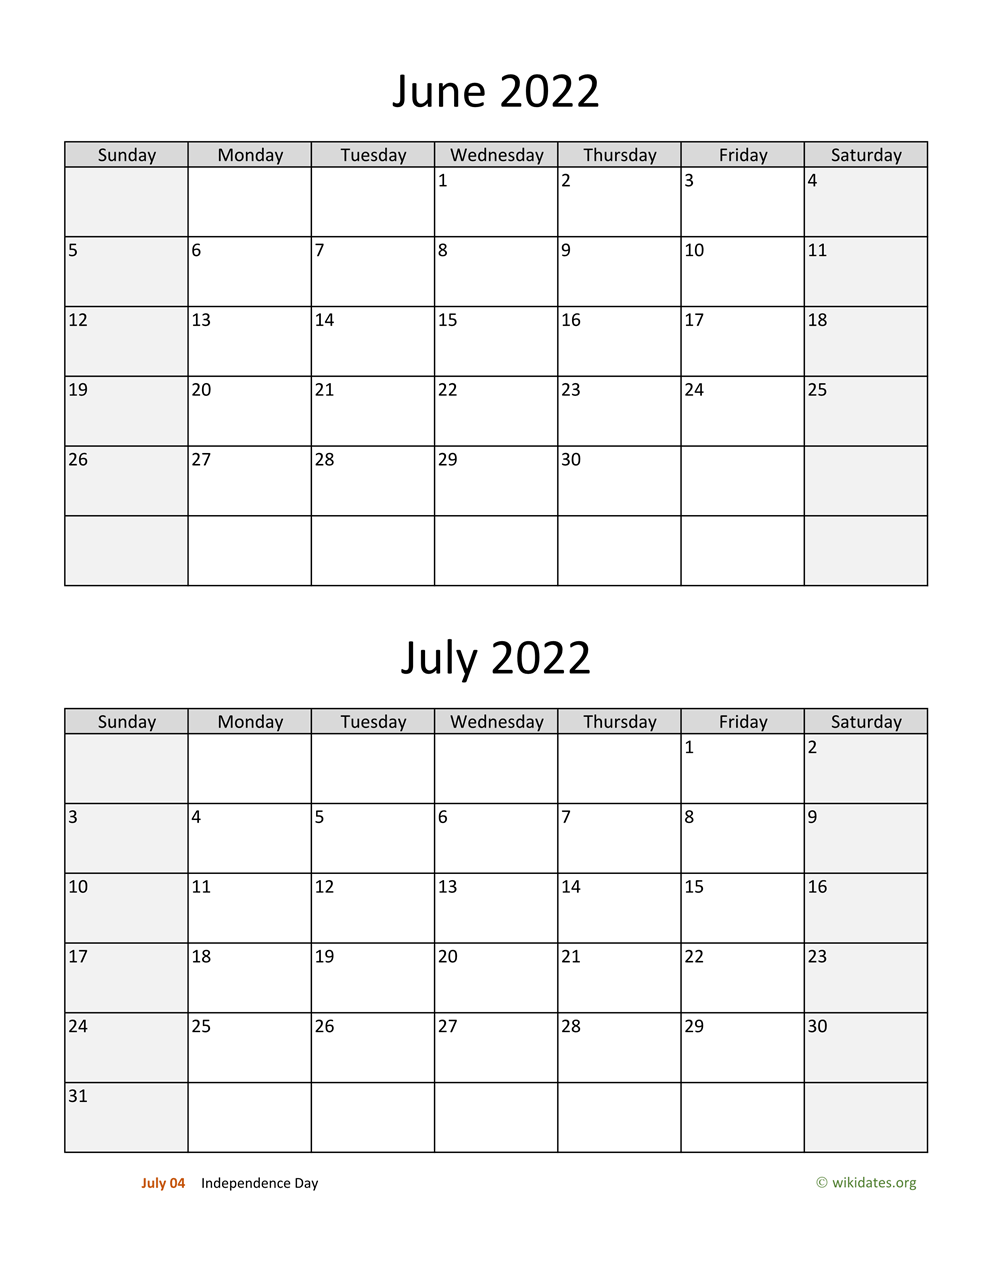 June July 2022 Calendar June And July 2022 Calendar | Wikidates.org